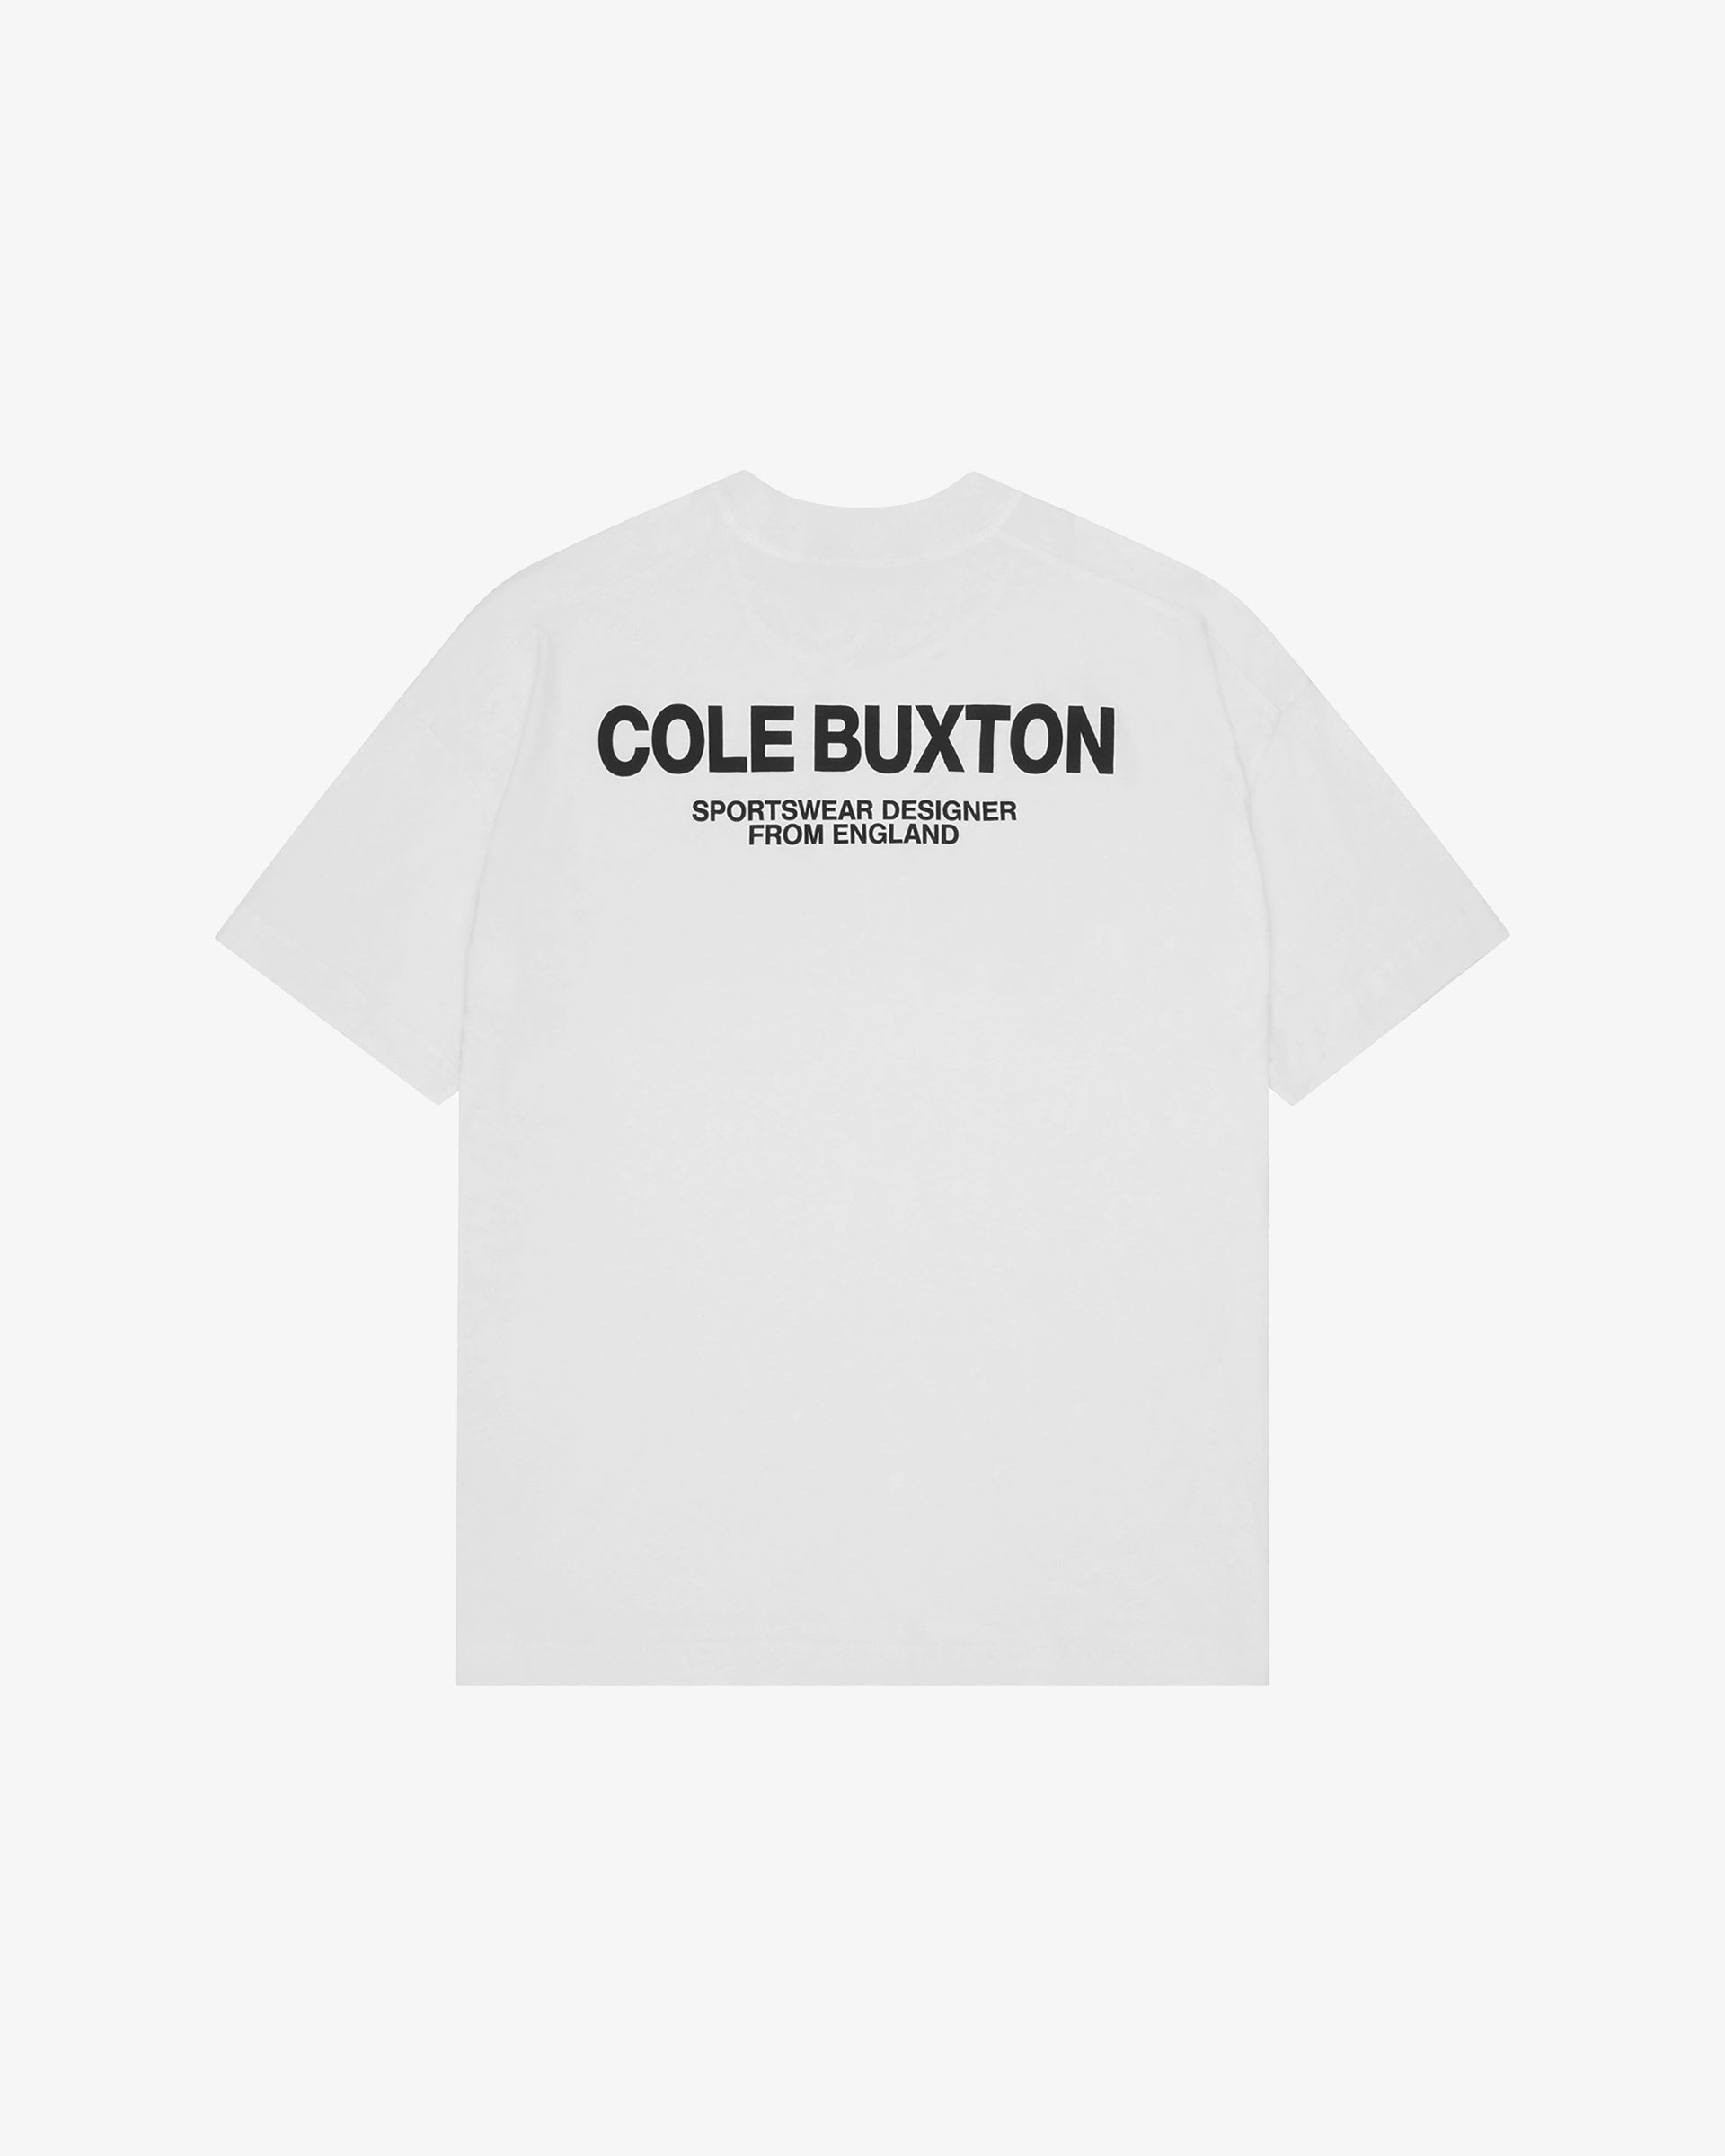 Cole Buxton Sportswear T-Shirt, Vintage Black